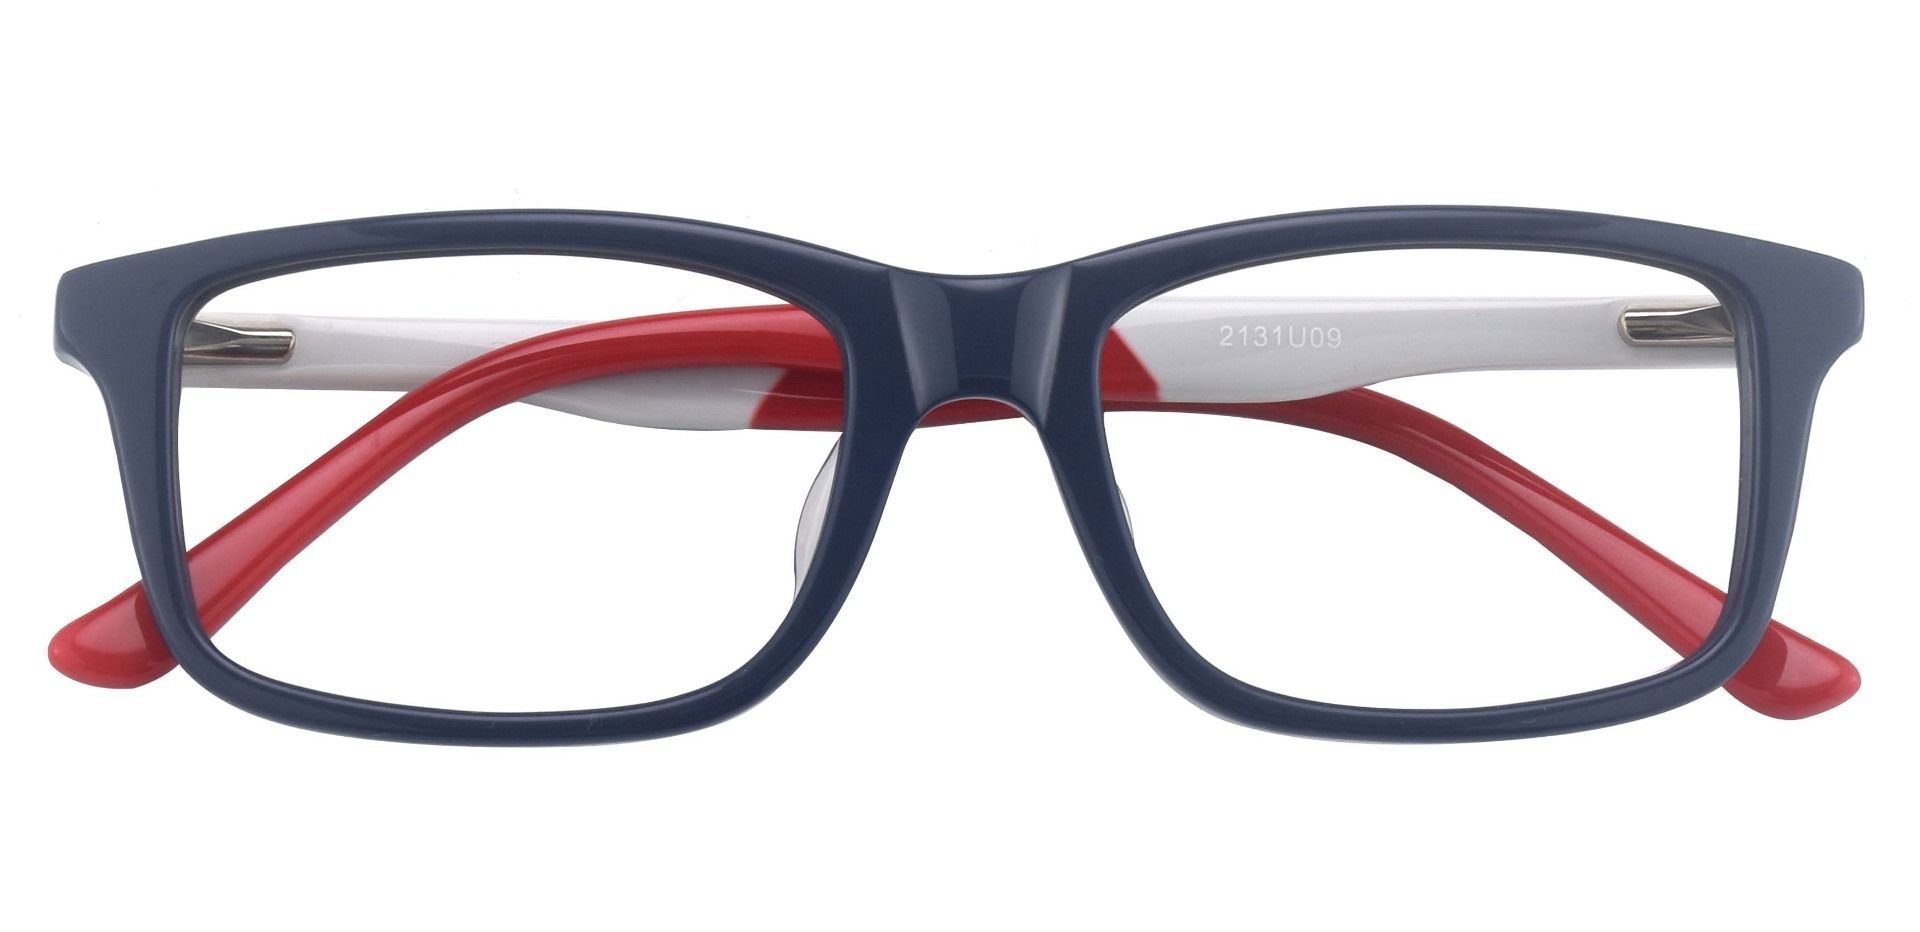 Titletown Rectangle Prescription Glasses - Blue White Red